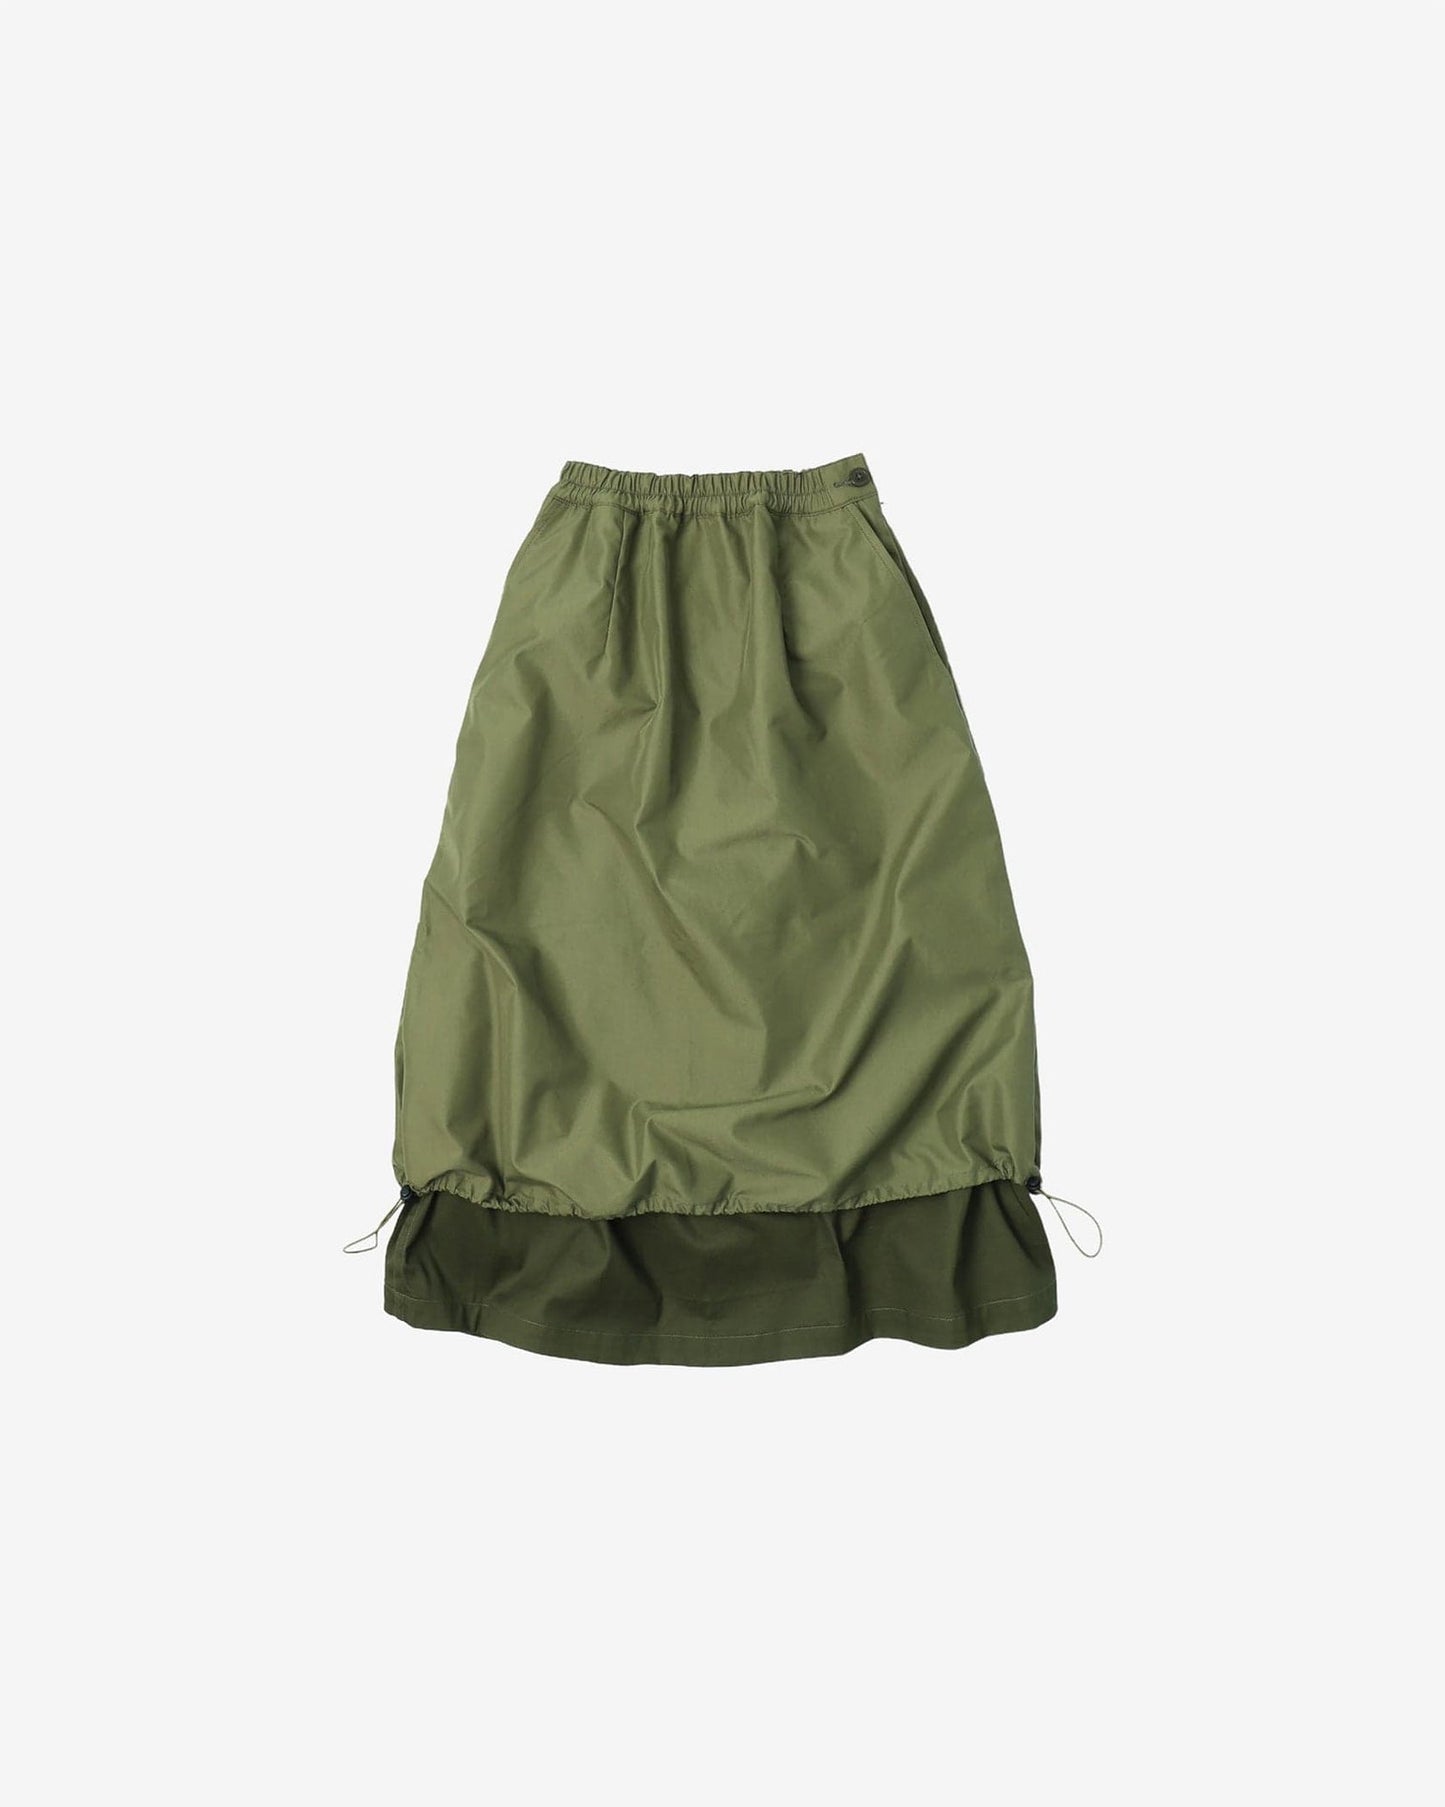 Workware - Mrs.Workware Lounge Skirt #576 - Green